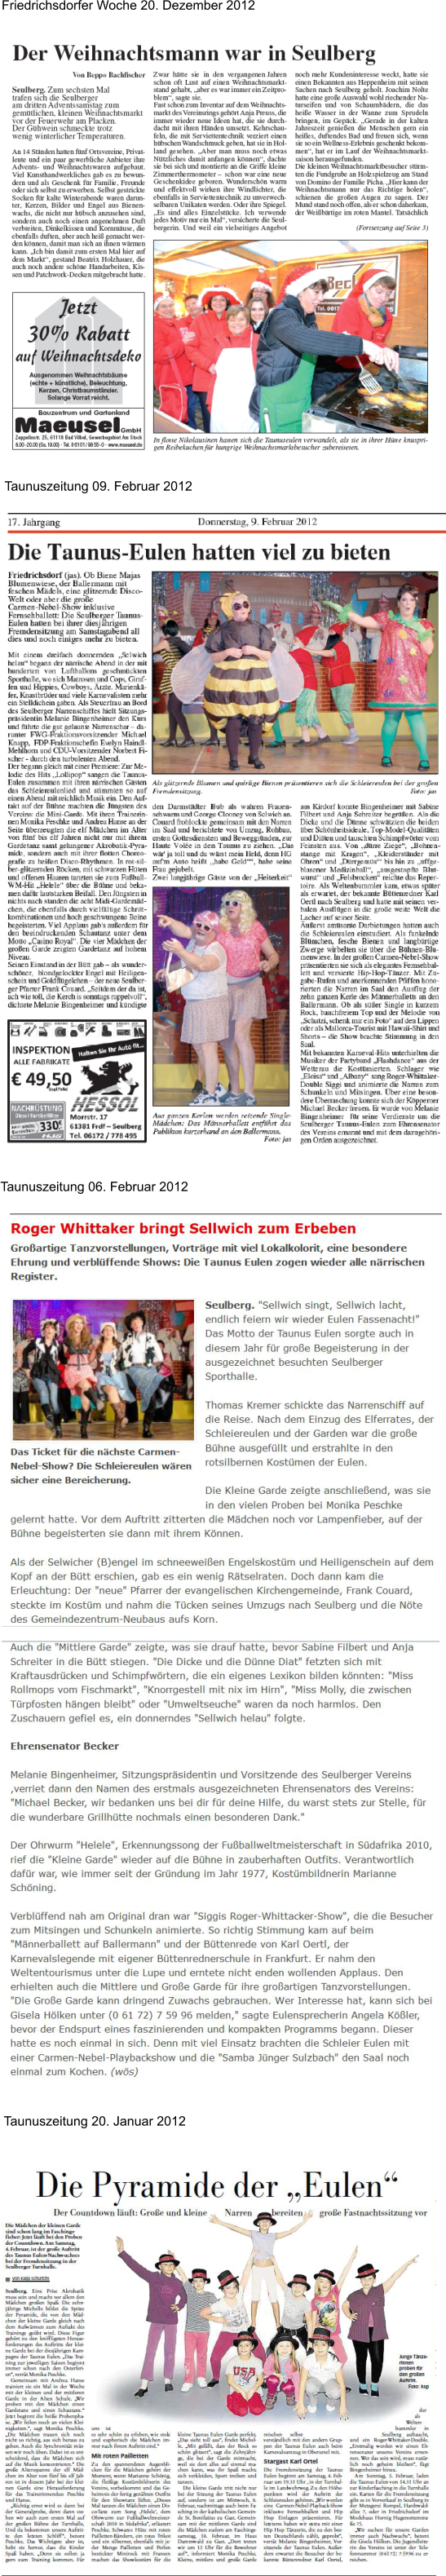 Friedrichsdorfer Woche 20. Dezember 2012 Taunuszeitung 09. Februar 2012 Taunuszeitung 06. Februar 2012 Taunuszeitung 20. Januar 2012